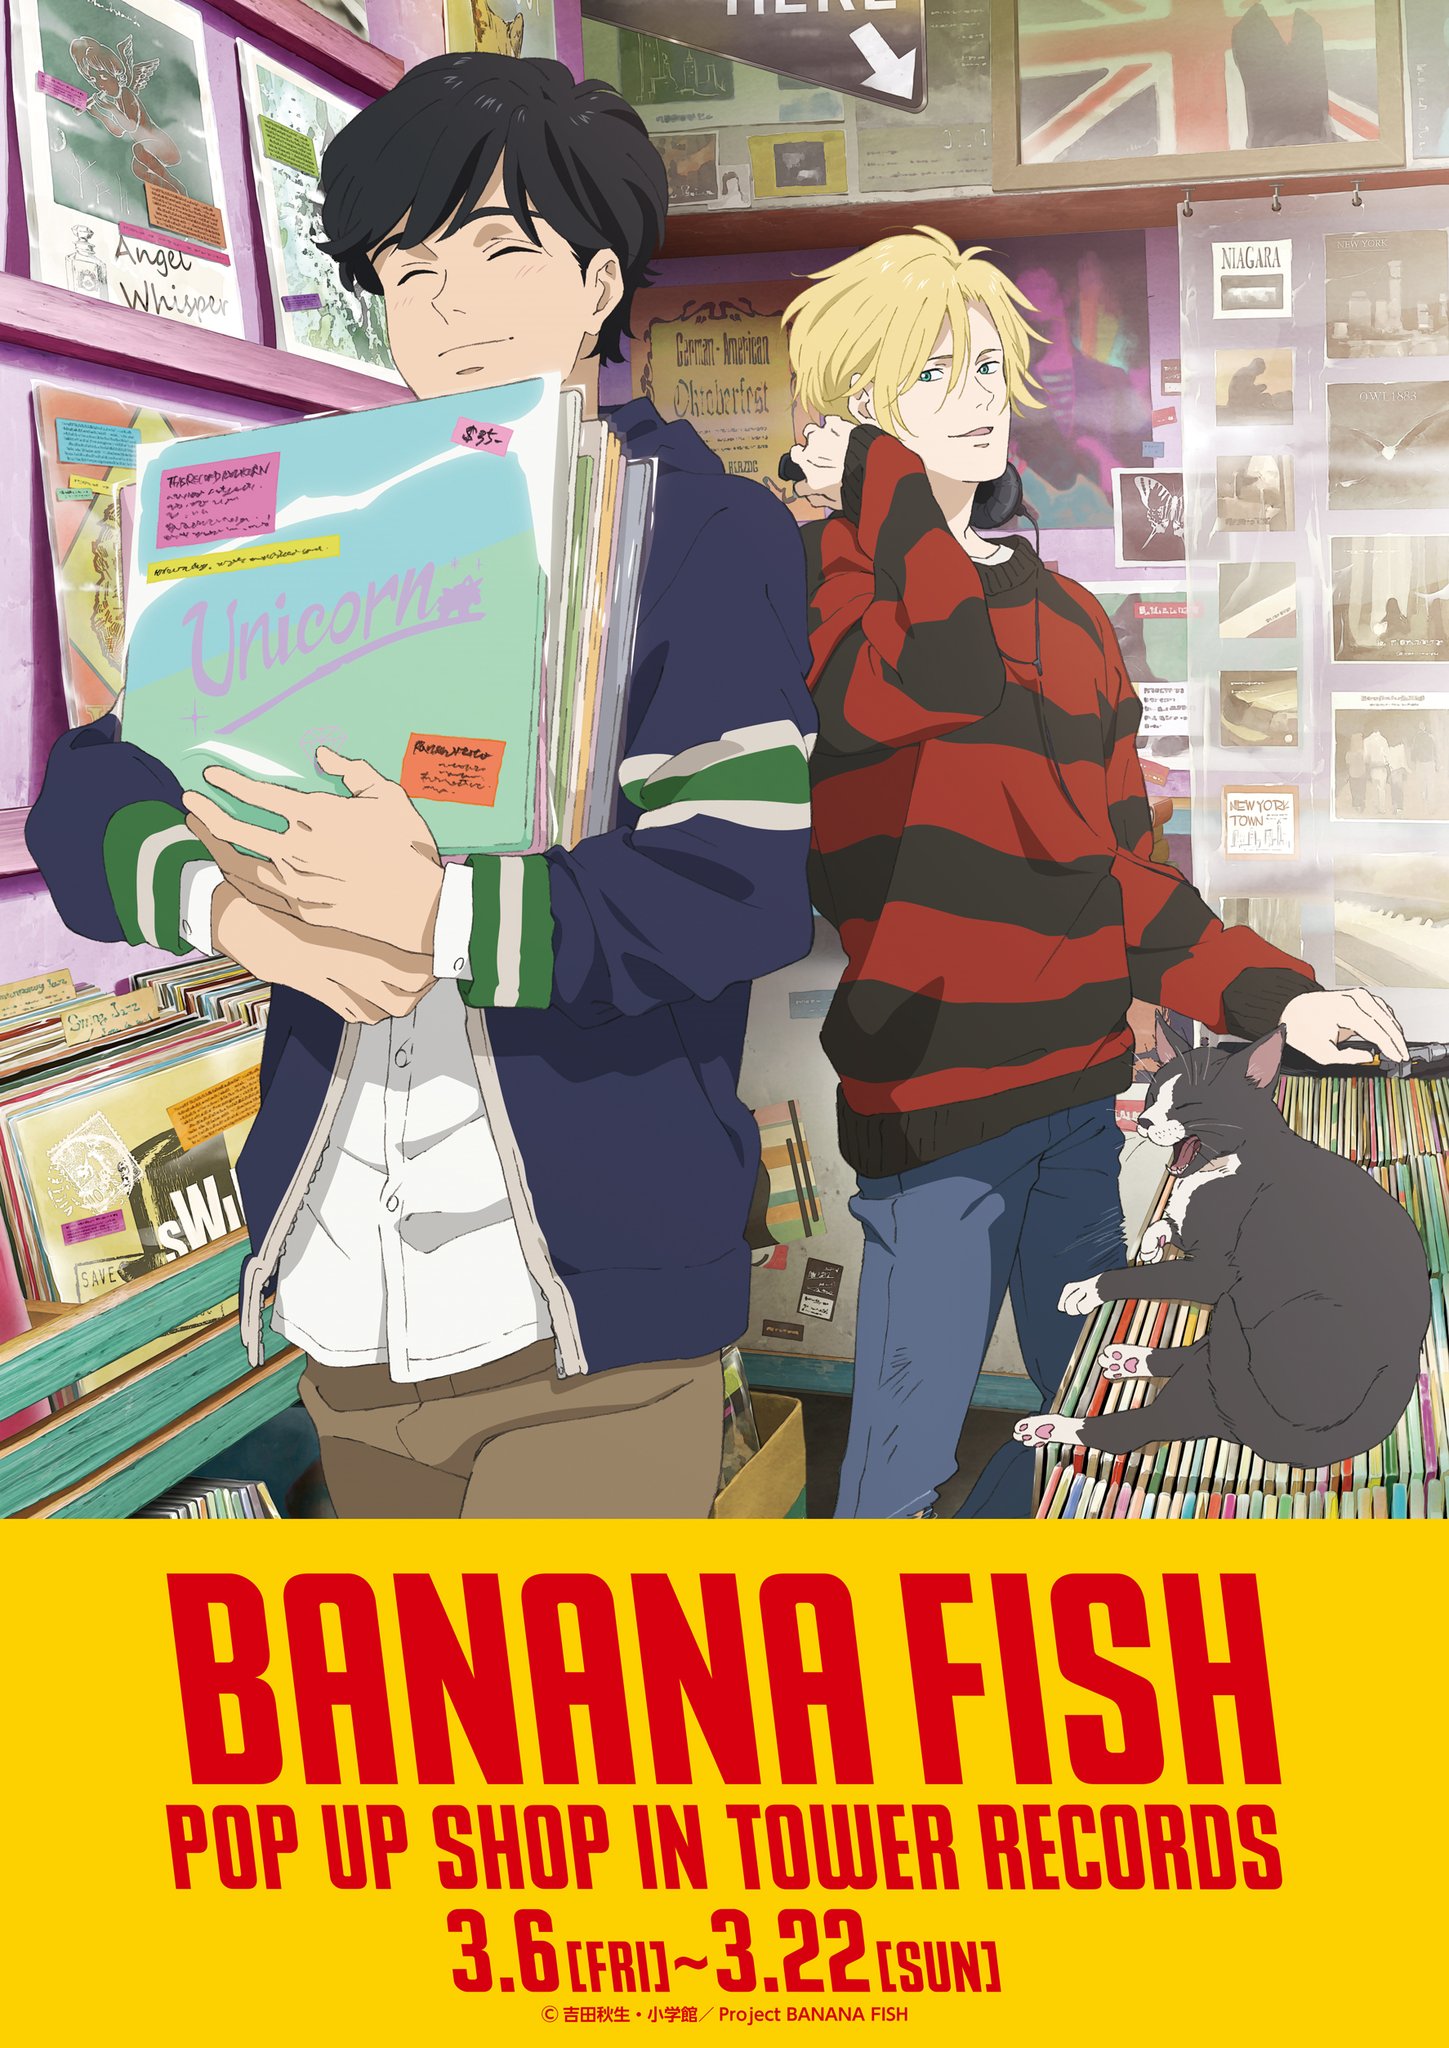 Banana Fish Anime Wins Tokyo Anime Award Fest's Fan Prize